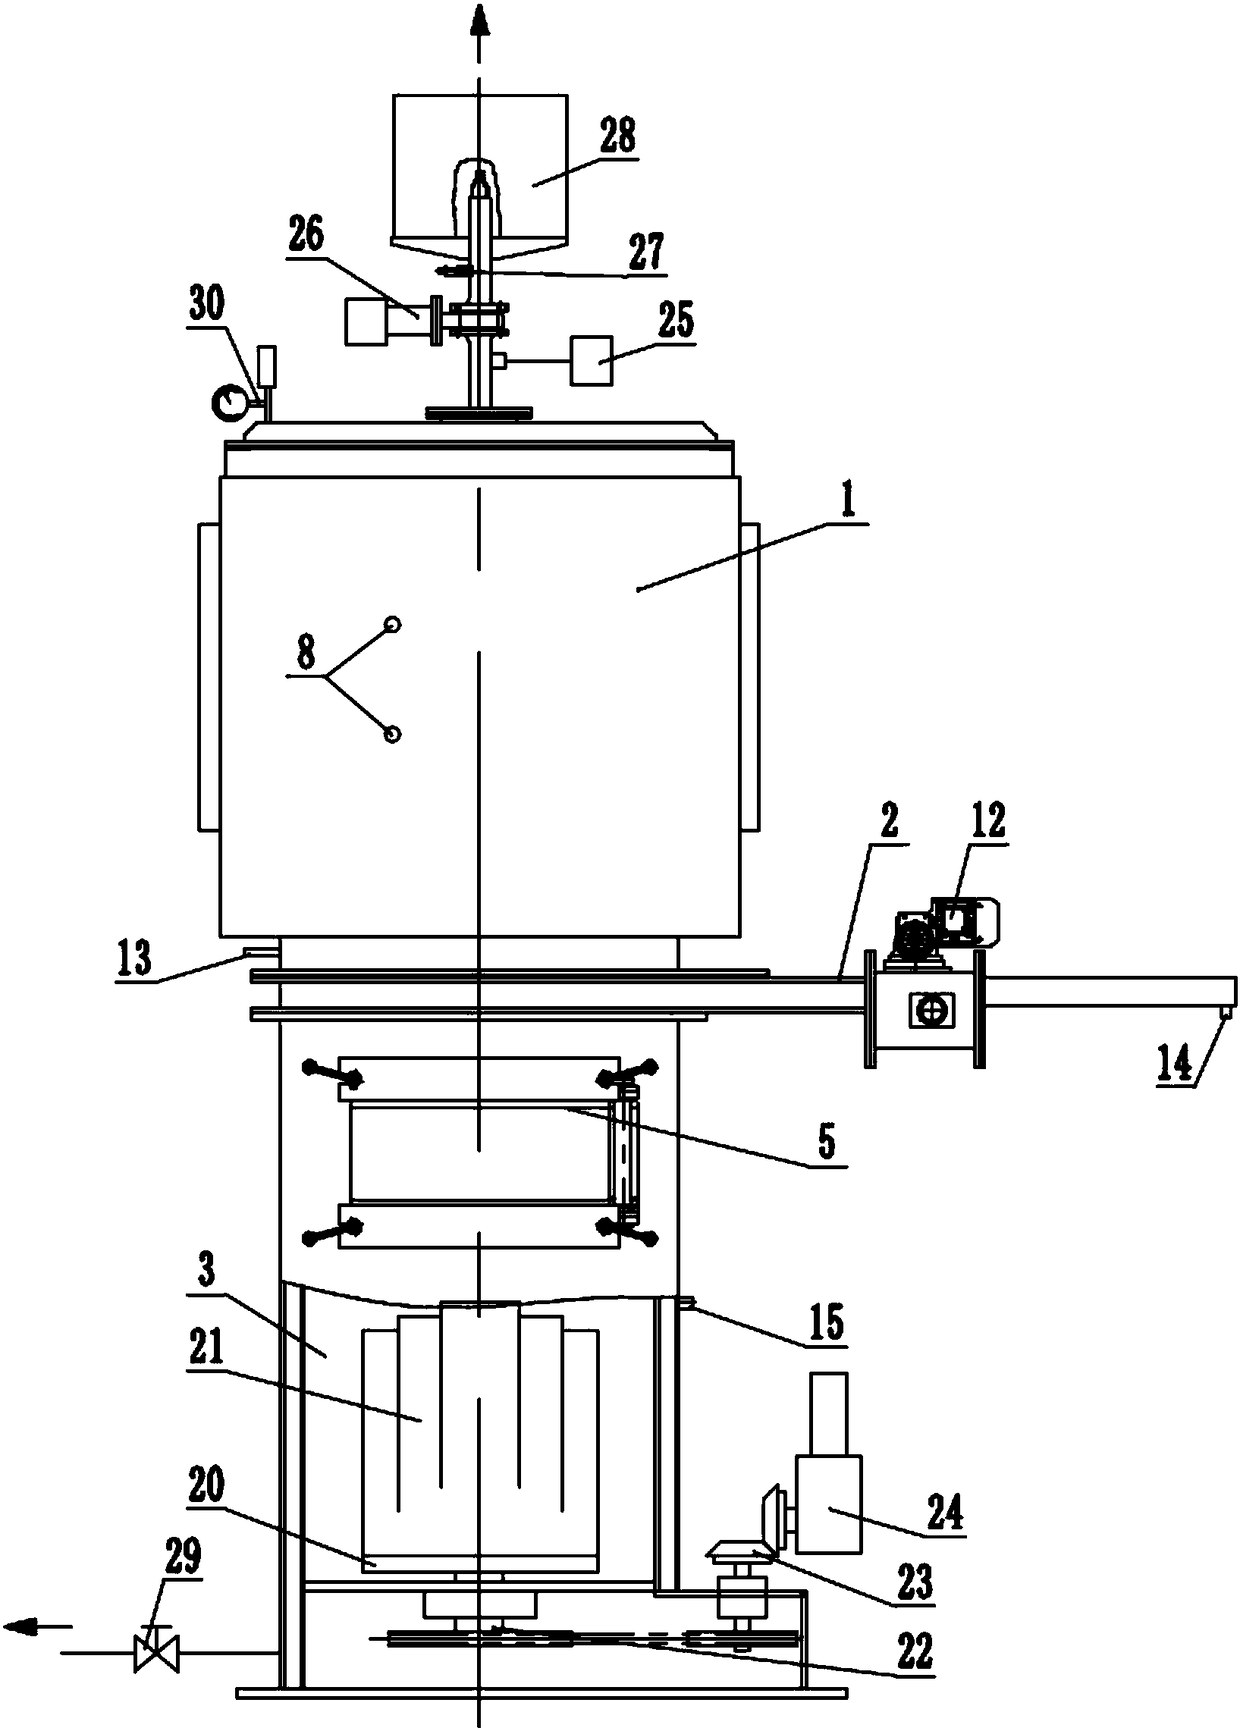 Degreasing sintering furnace for metal powder injection molding